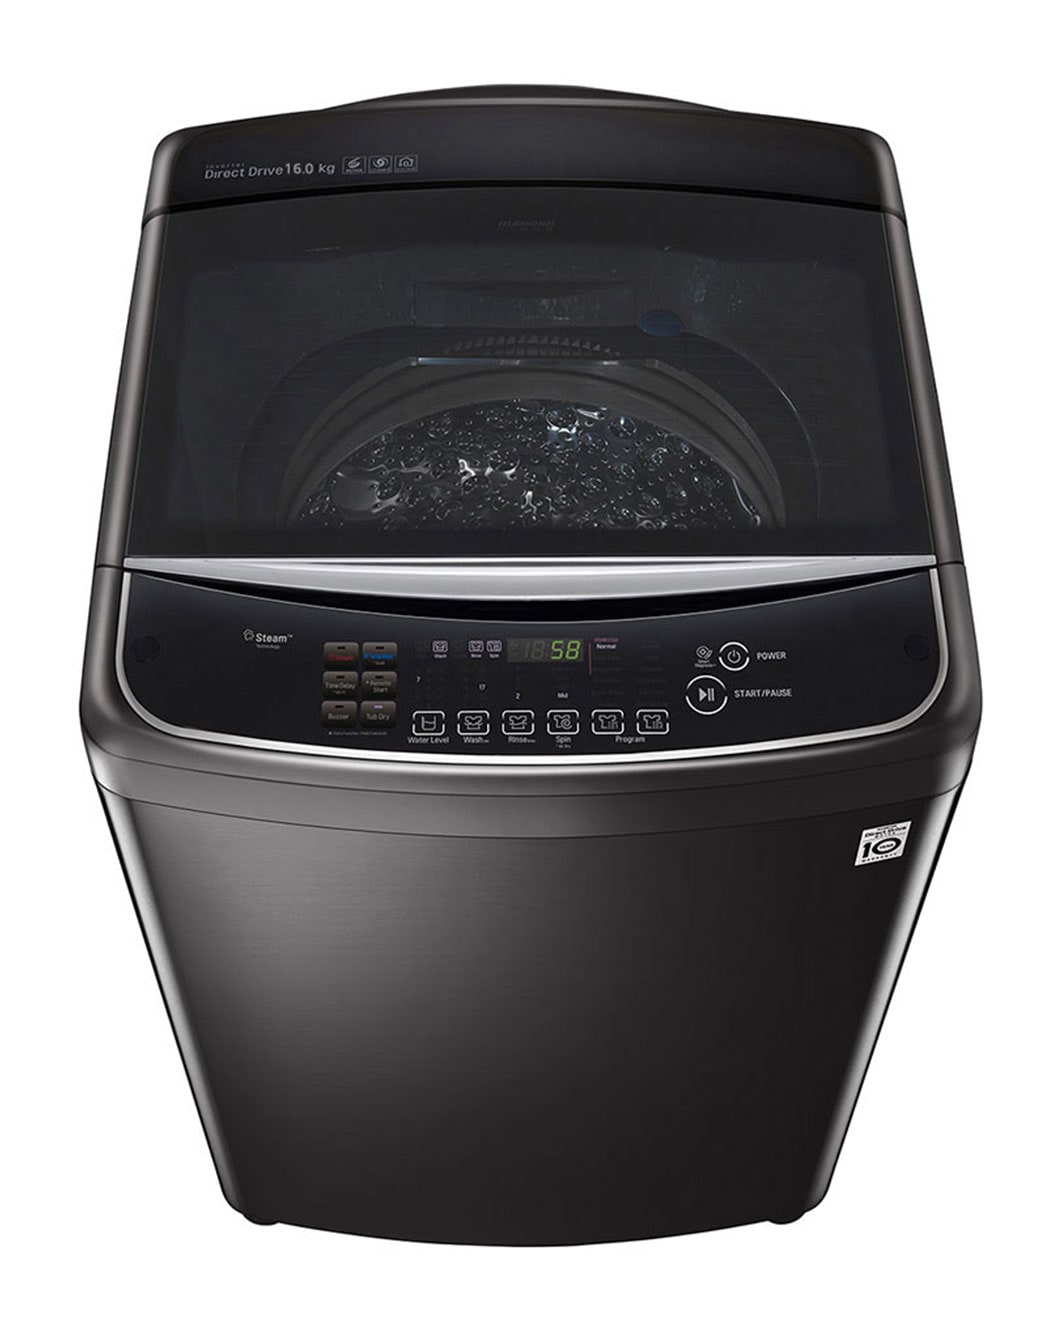 LG Top Load Washing Machine 16kg, Black LG UAE